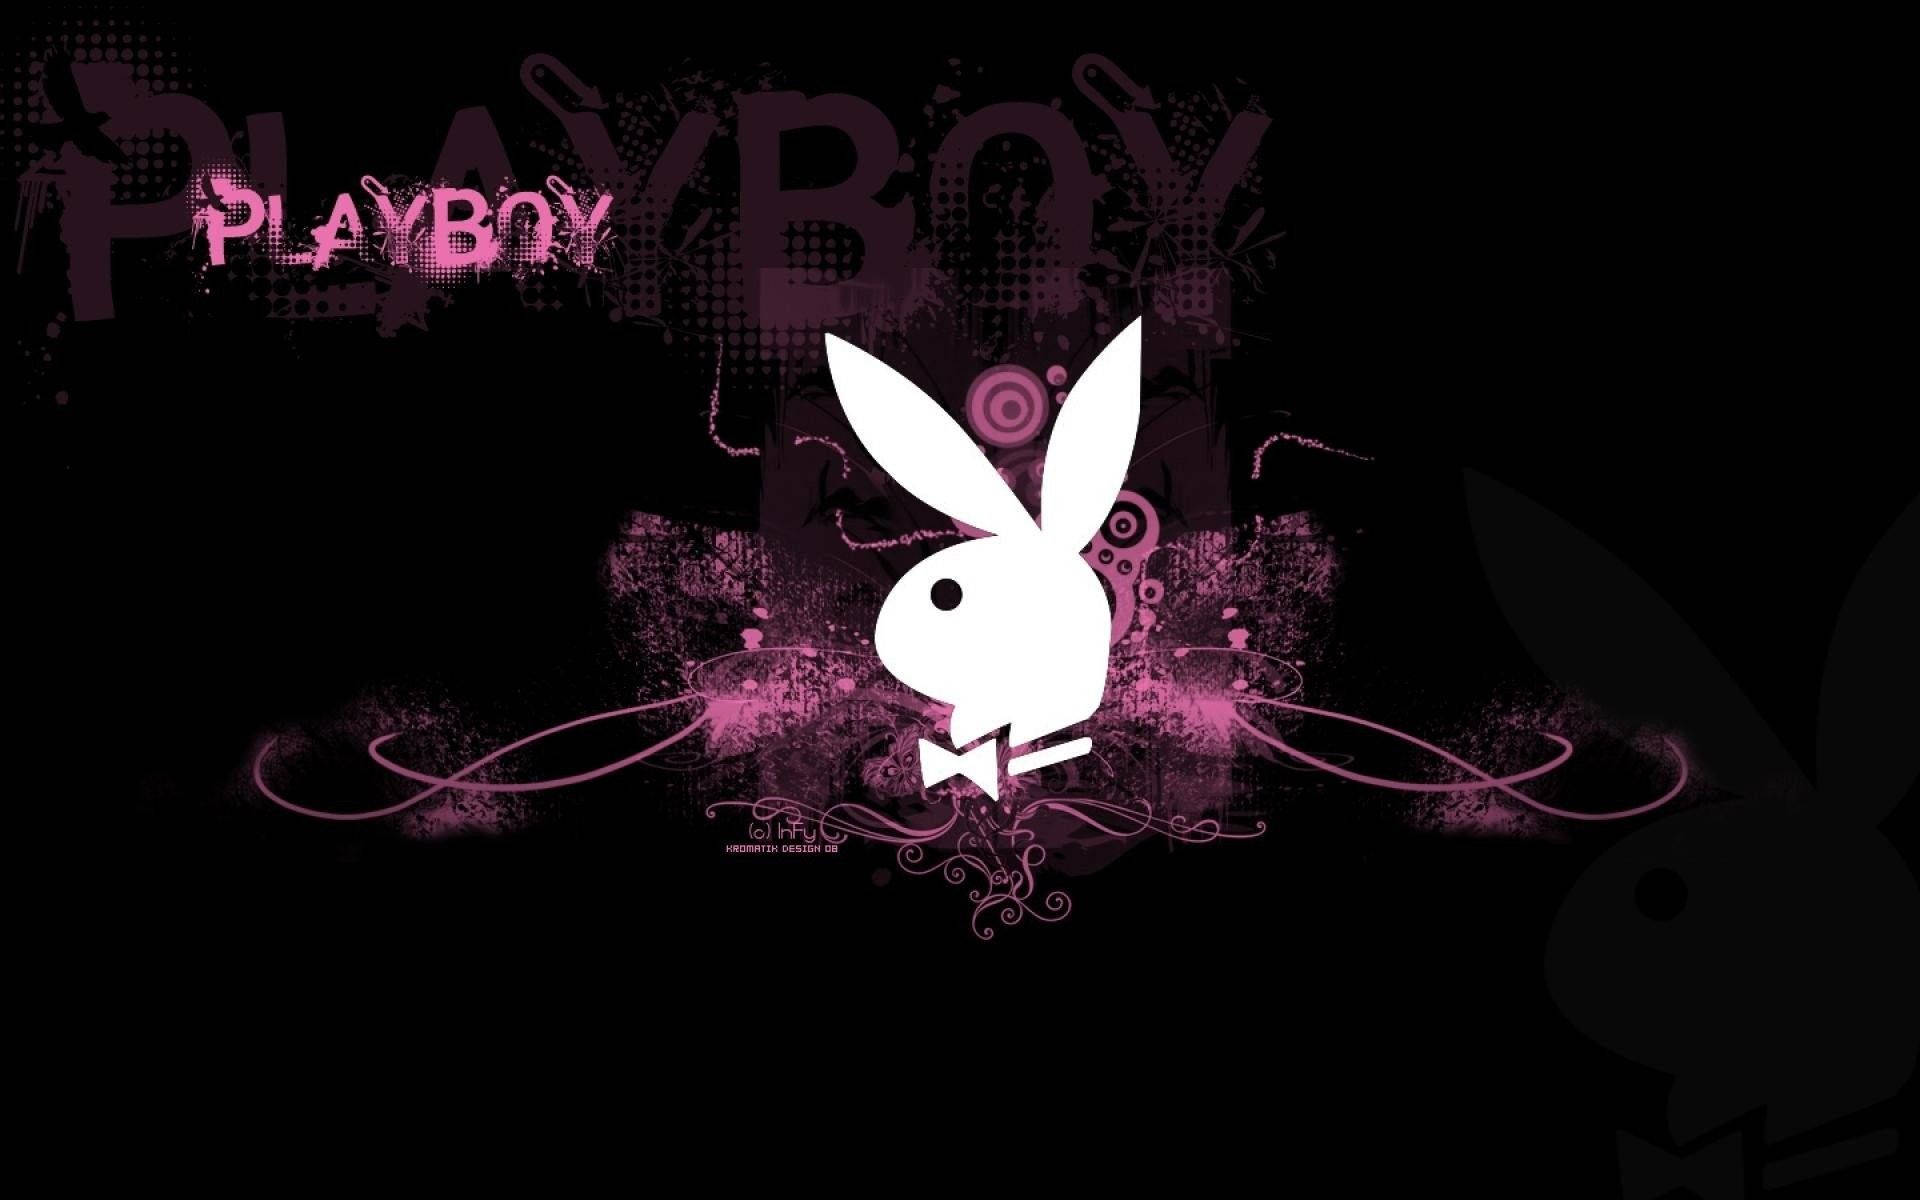 Playboy Logo With Swirl Patterns Wallpaper